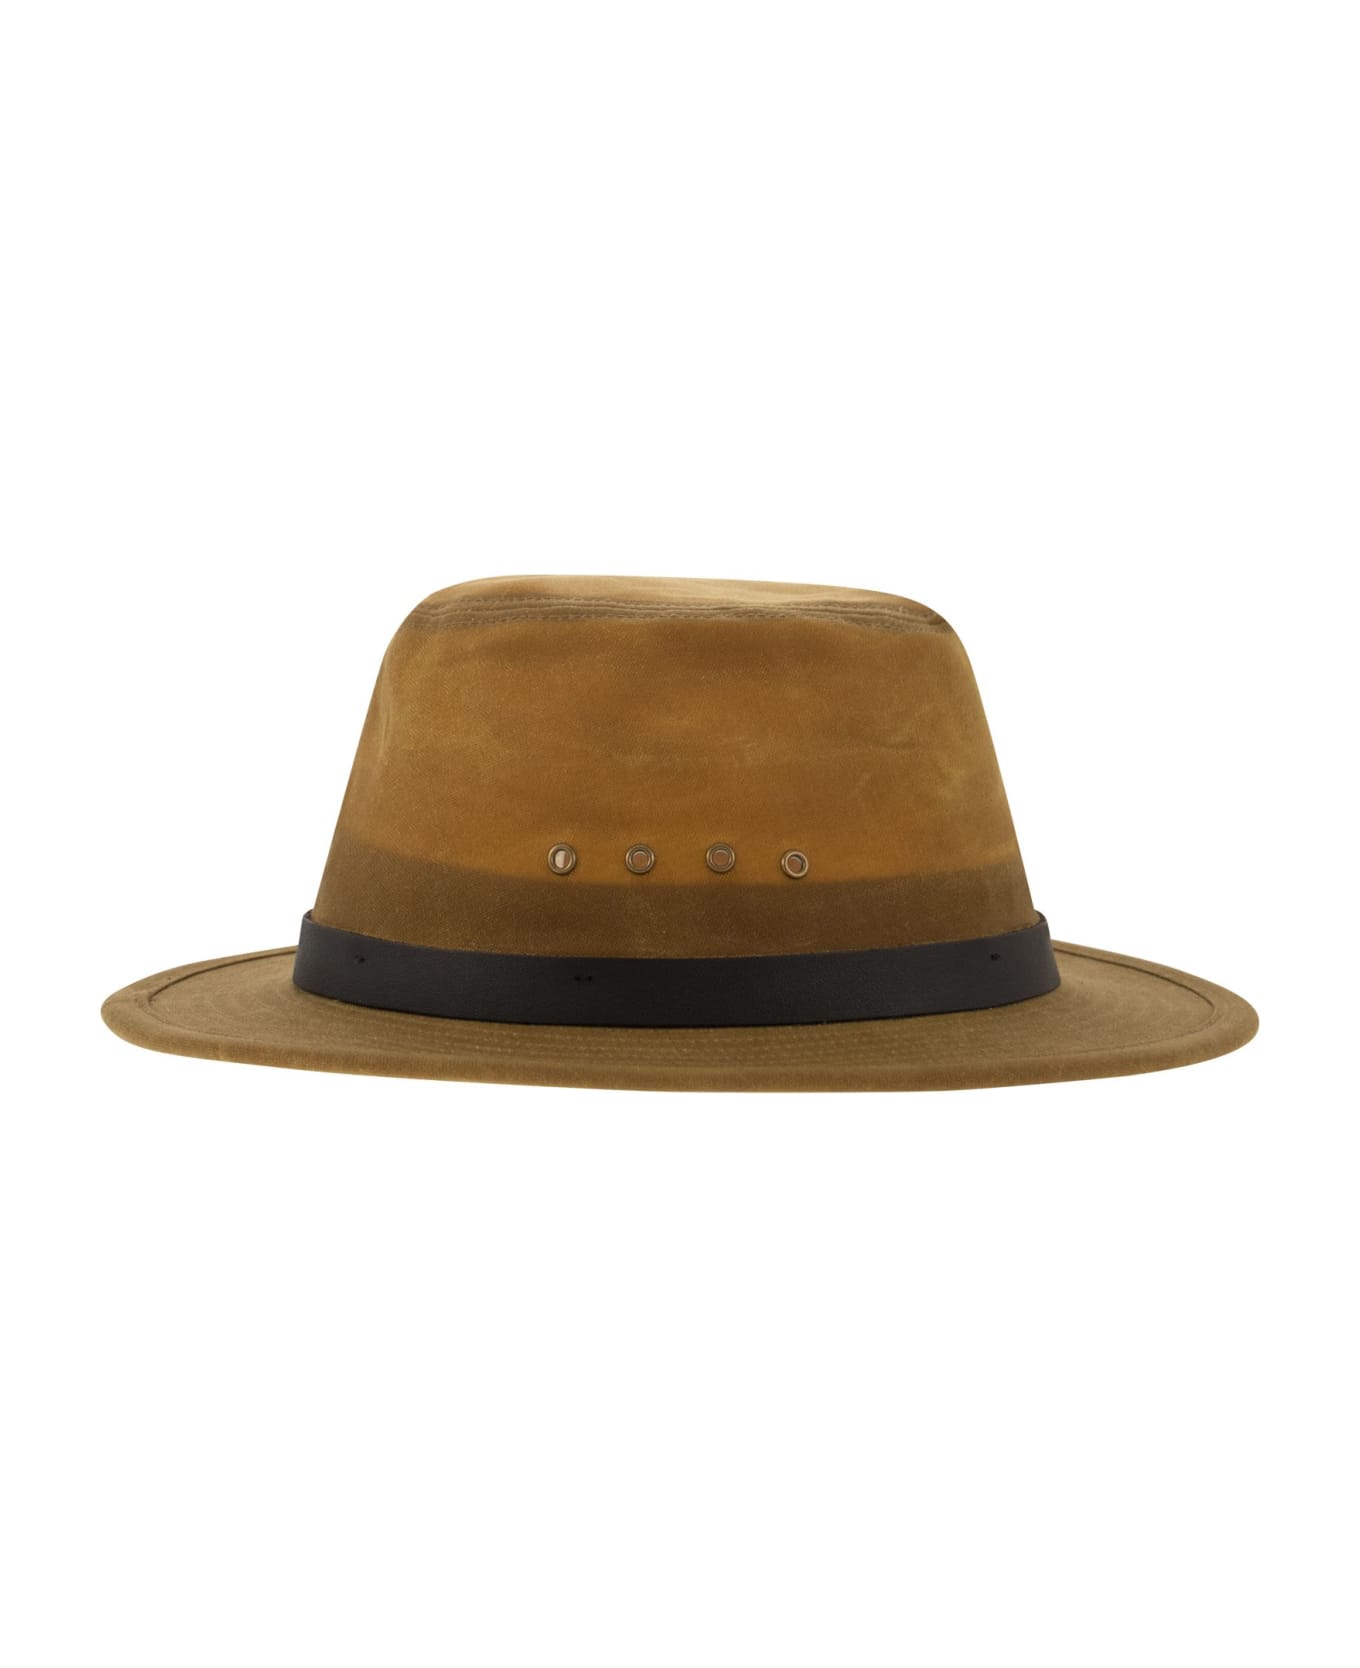 Filson Classic Full-brimmed Hat - Beige